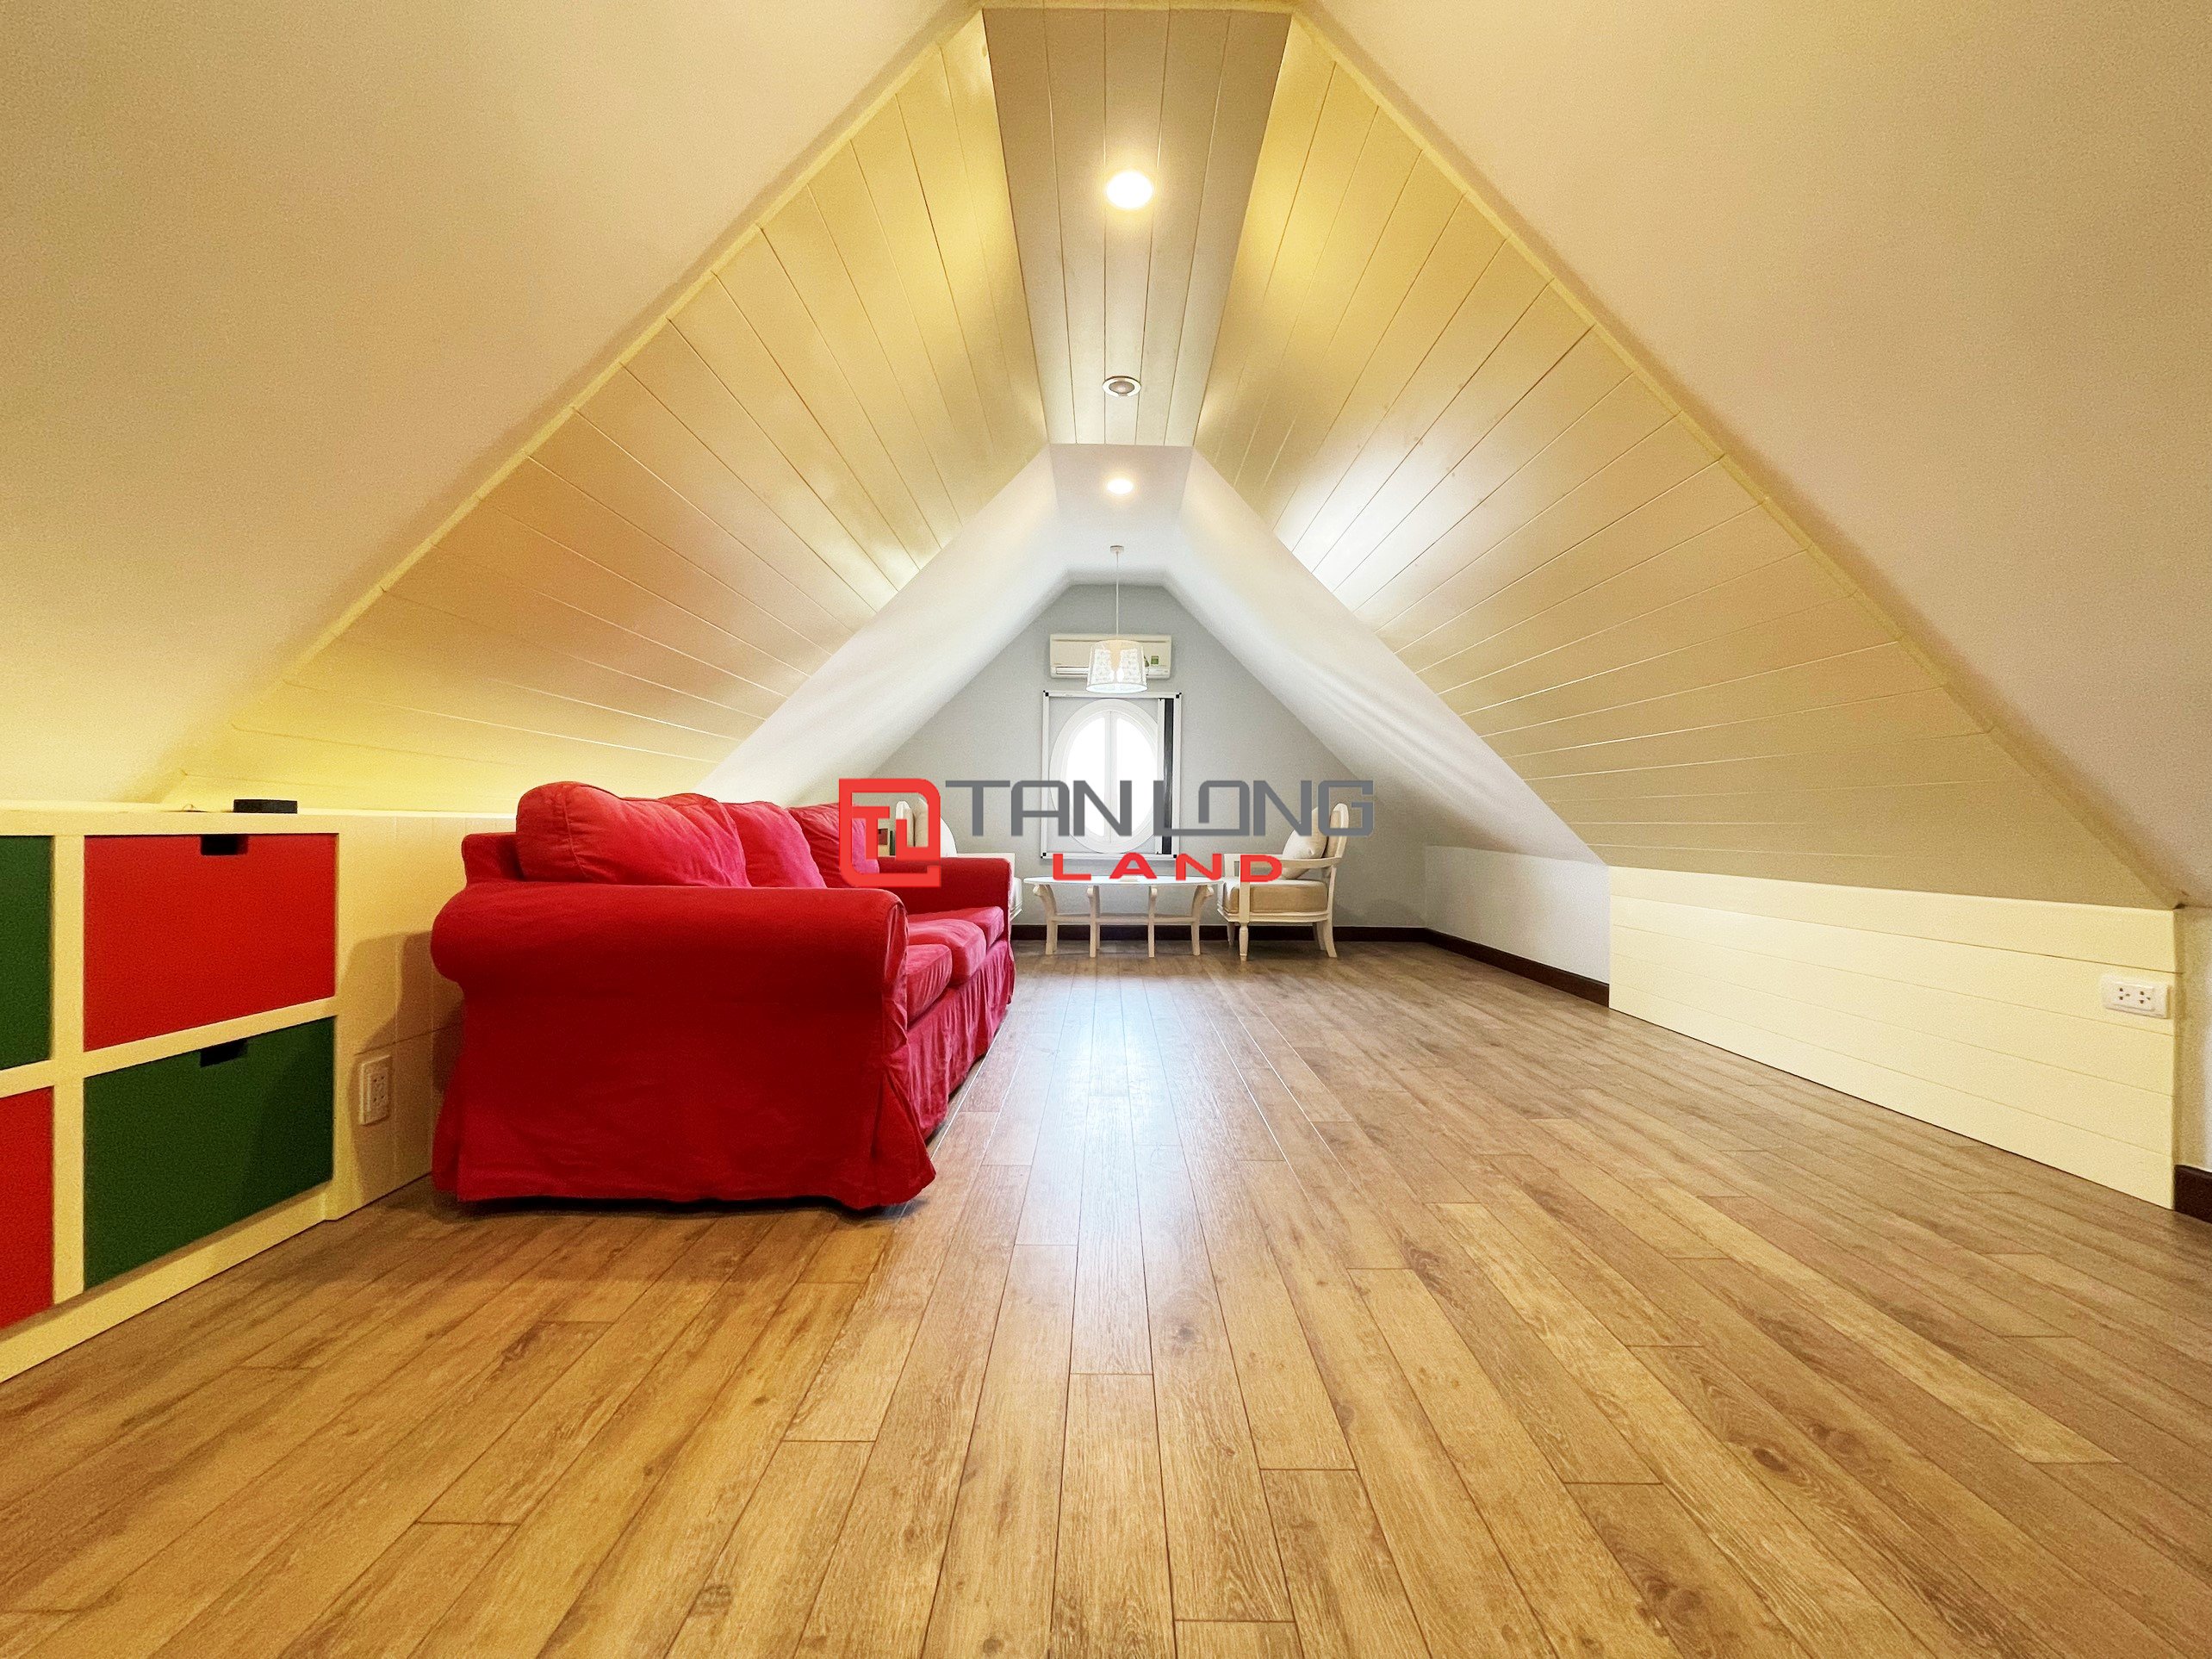 Full Furniture Villa for rent with 4 Bedrooms in Vinhomes Riverside Long Bien 21